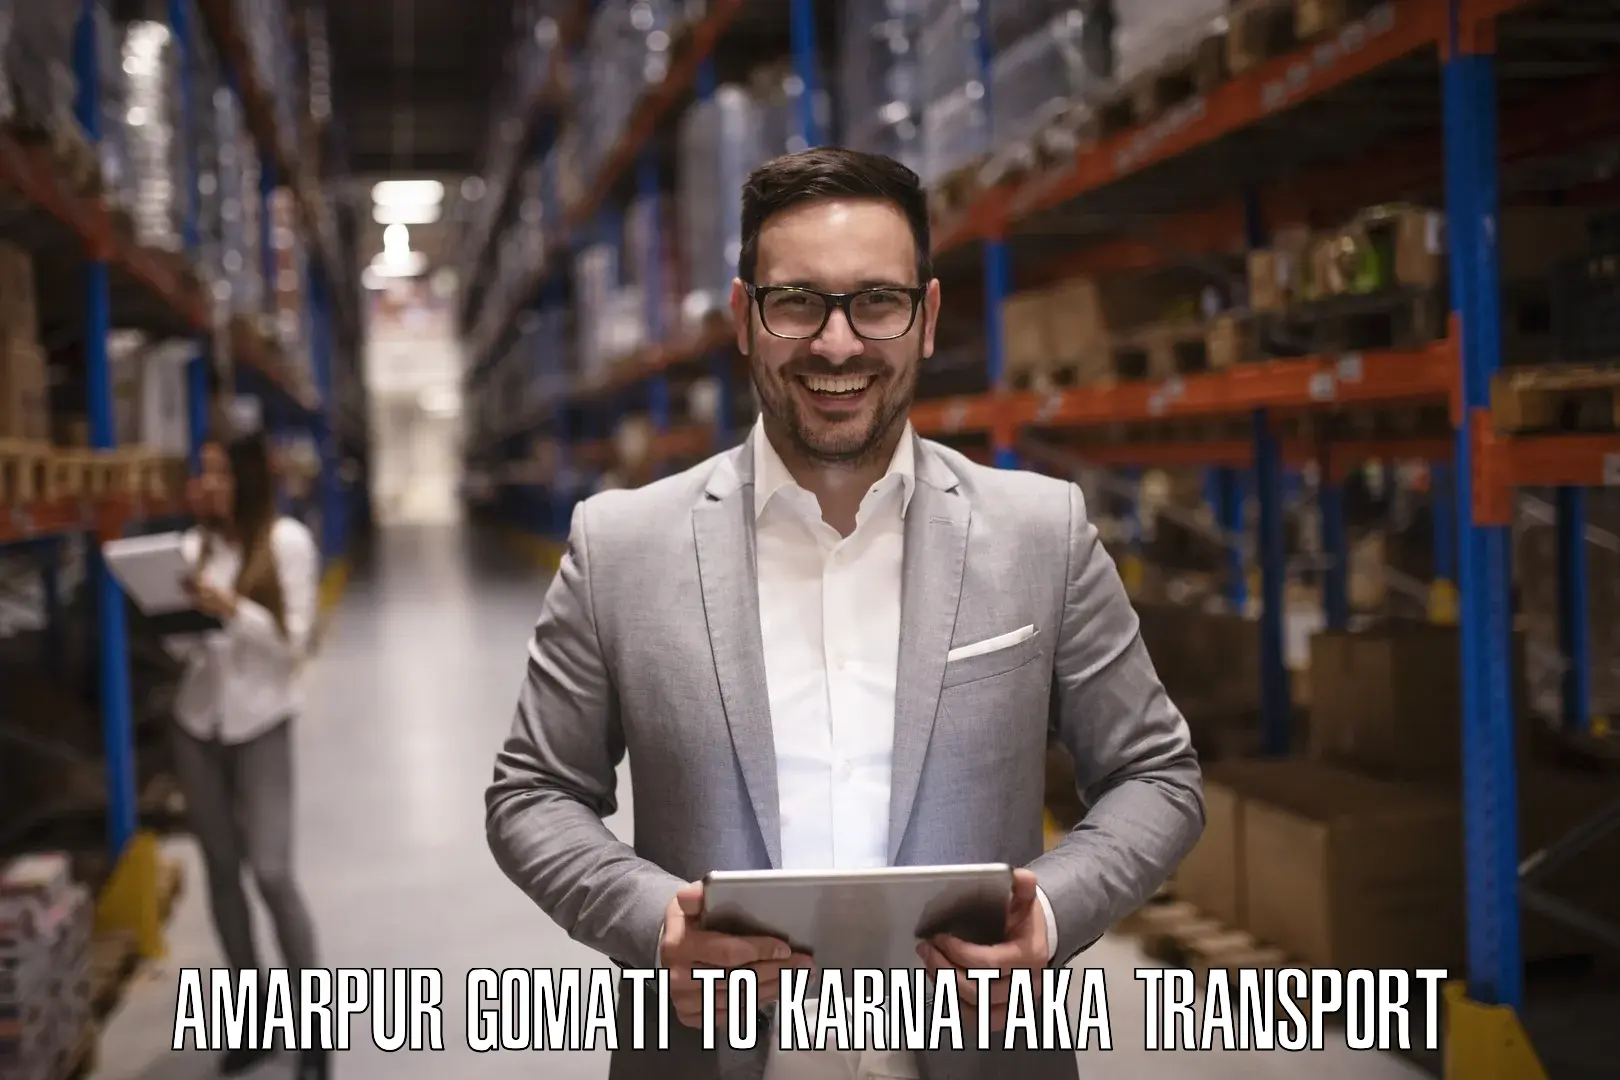 Truck transport companies in India Amarpur Gomati to Karnataka